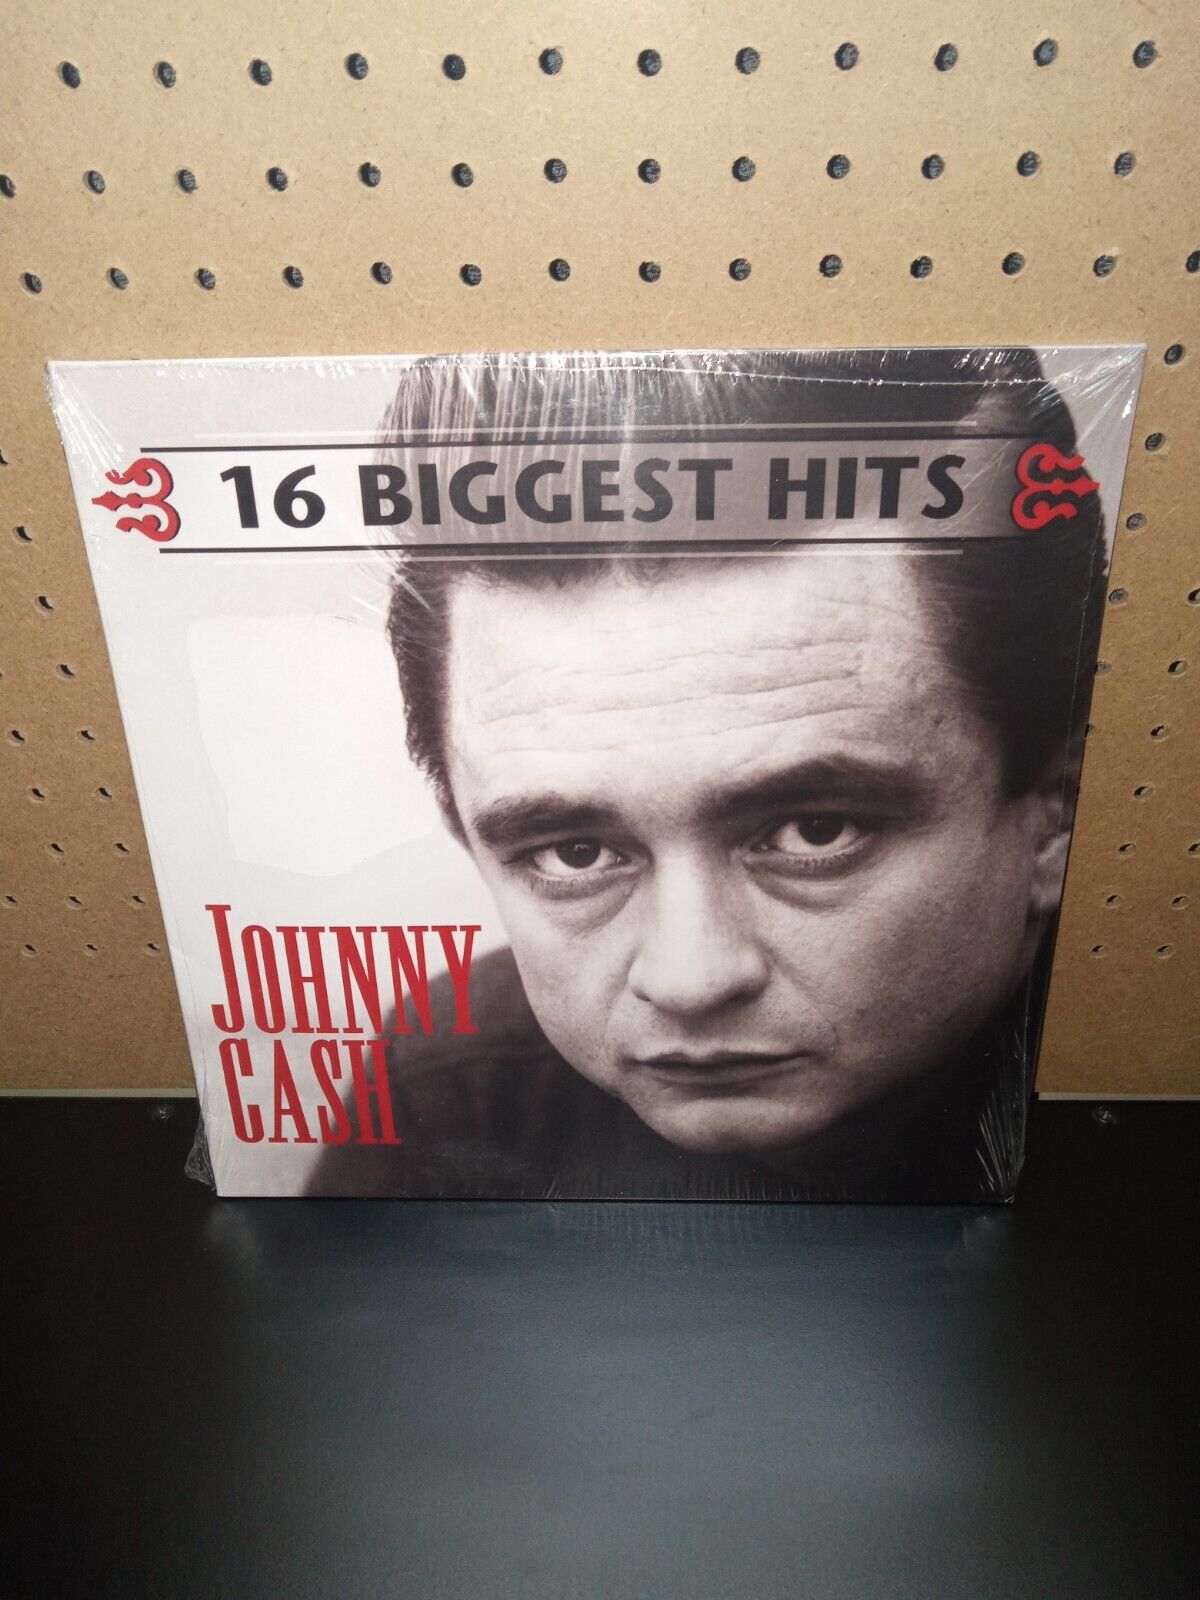 Johnny Cash 16 Biggest Hits 2019 Vinyl LP Album Compilation Repress US Legacy